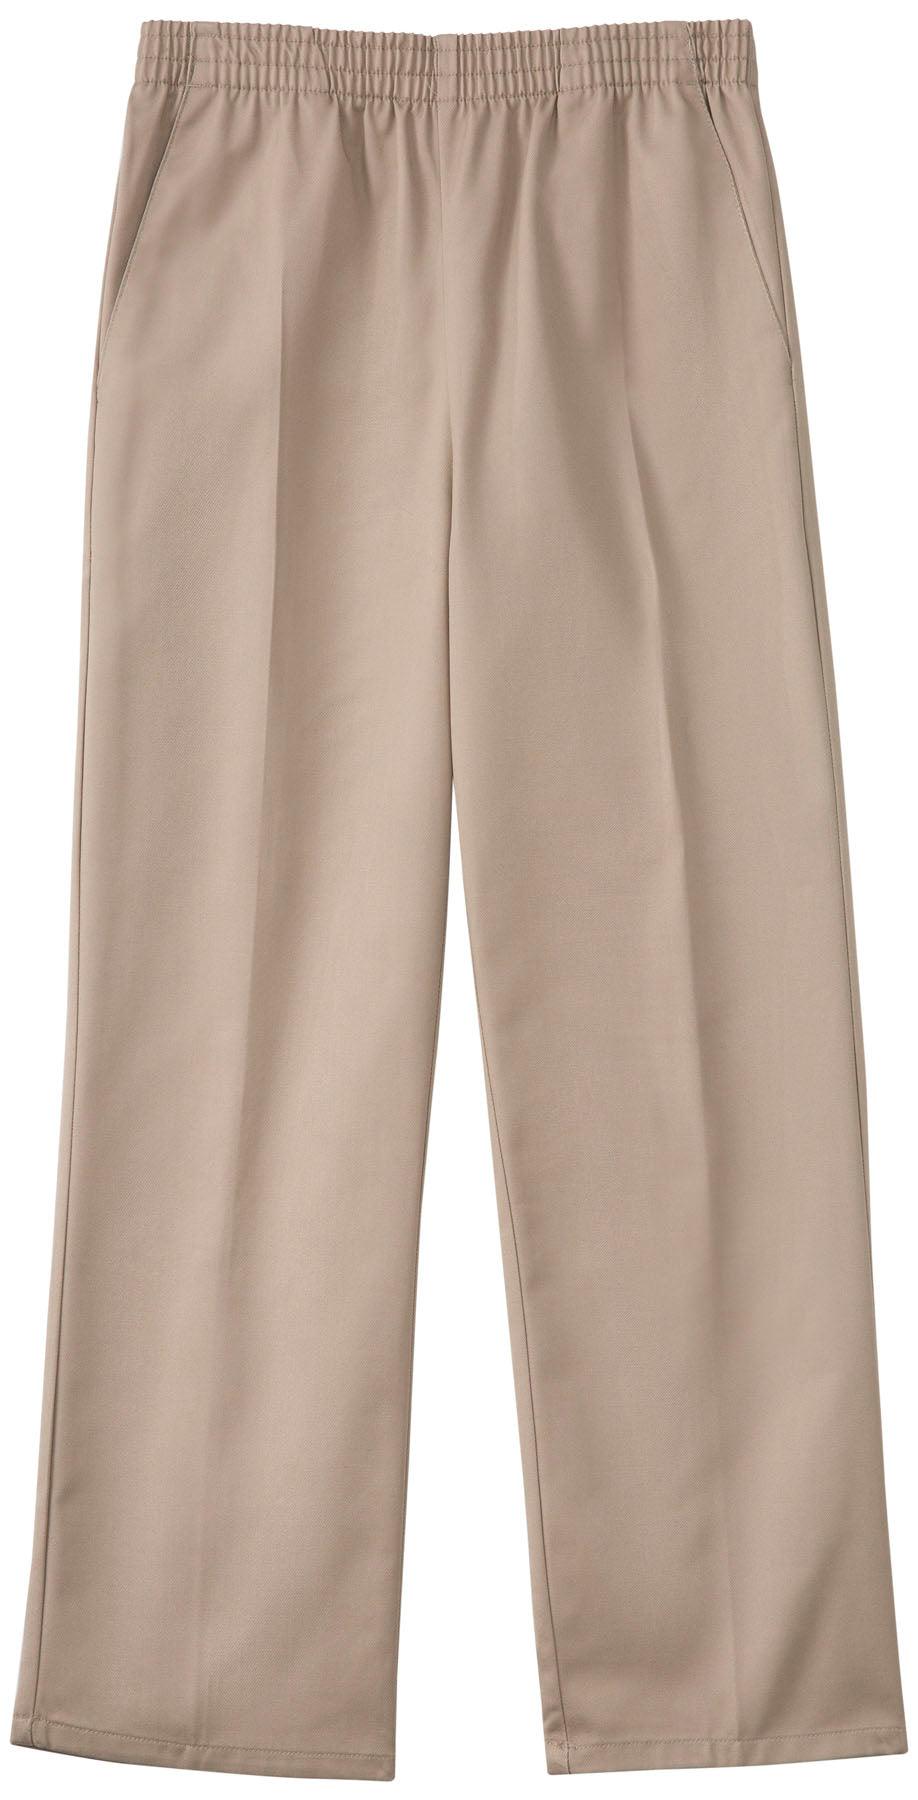 Unisex Pull On Pant in Khaki 51061N - Jay's Uniform